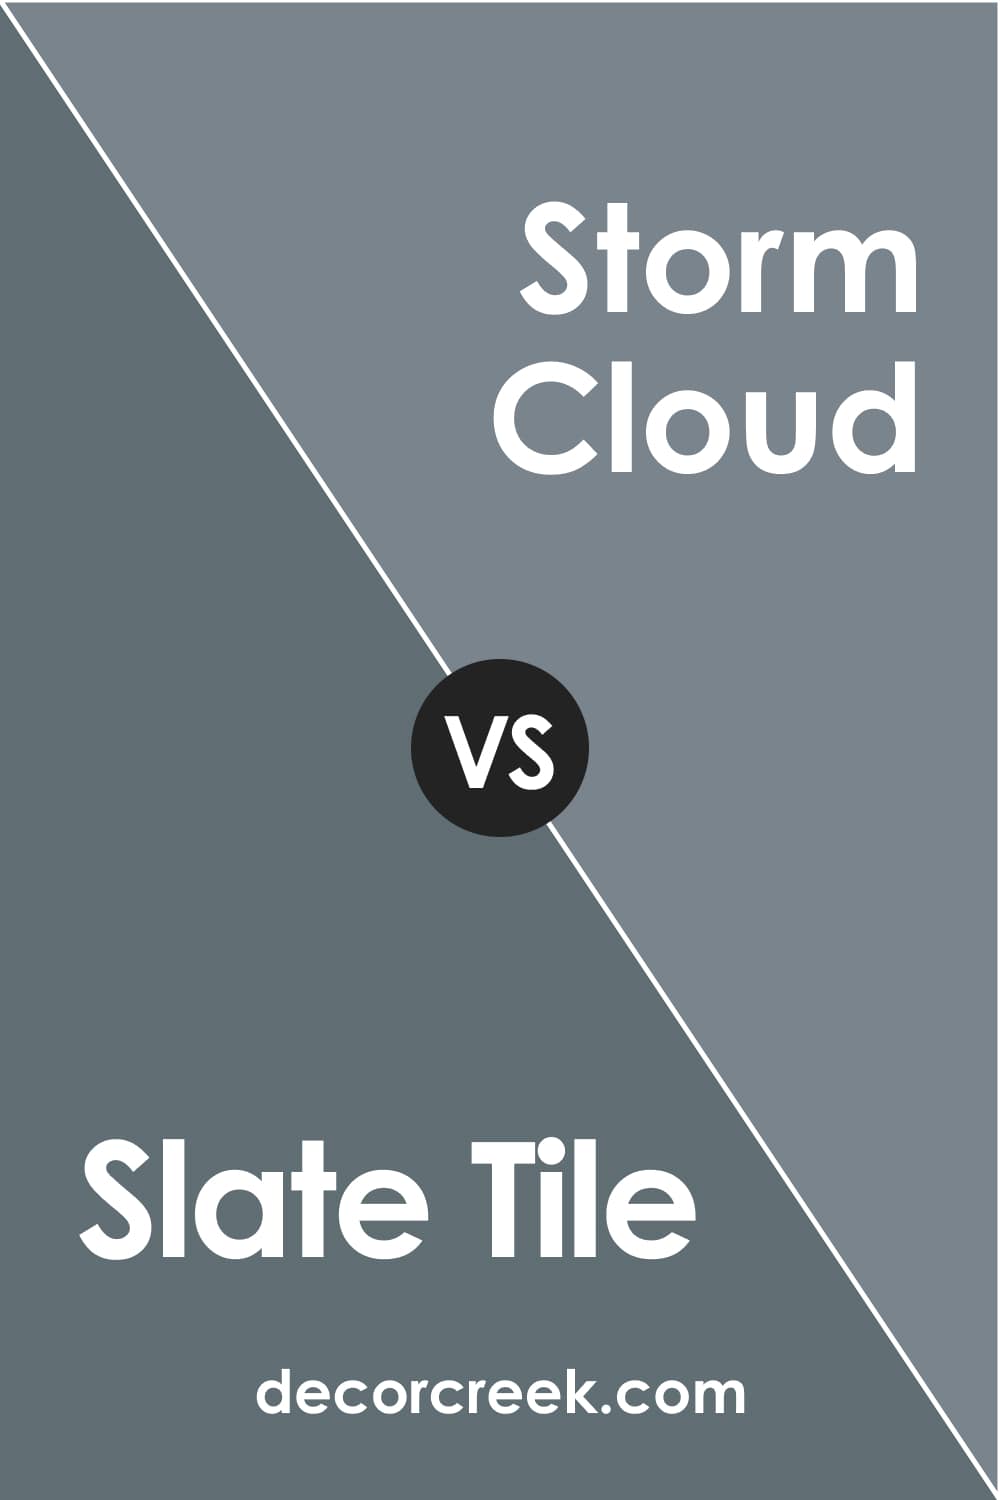 Slate Tile vs Storm Cloud